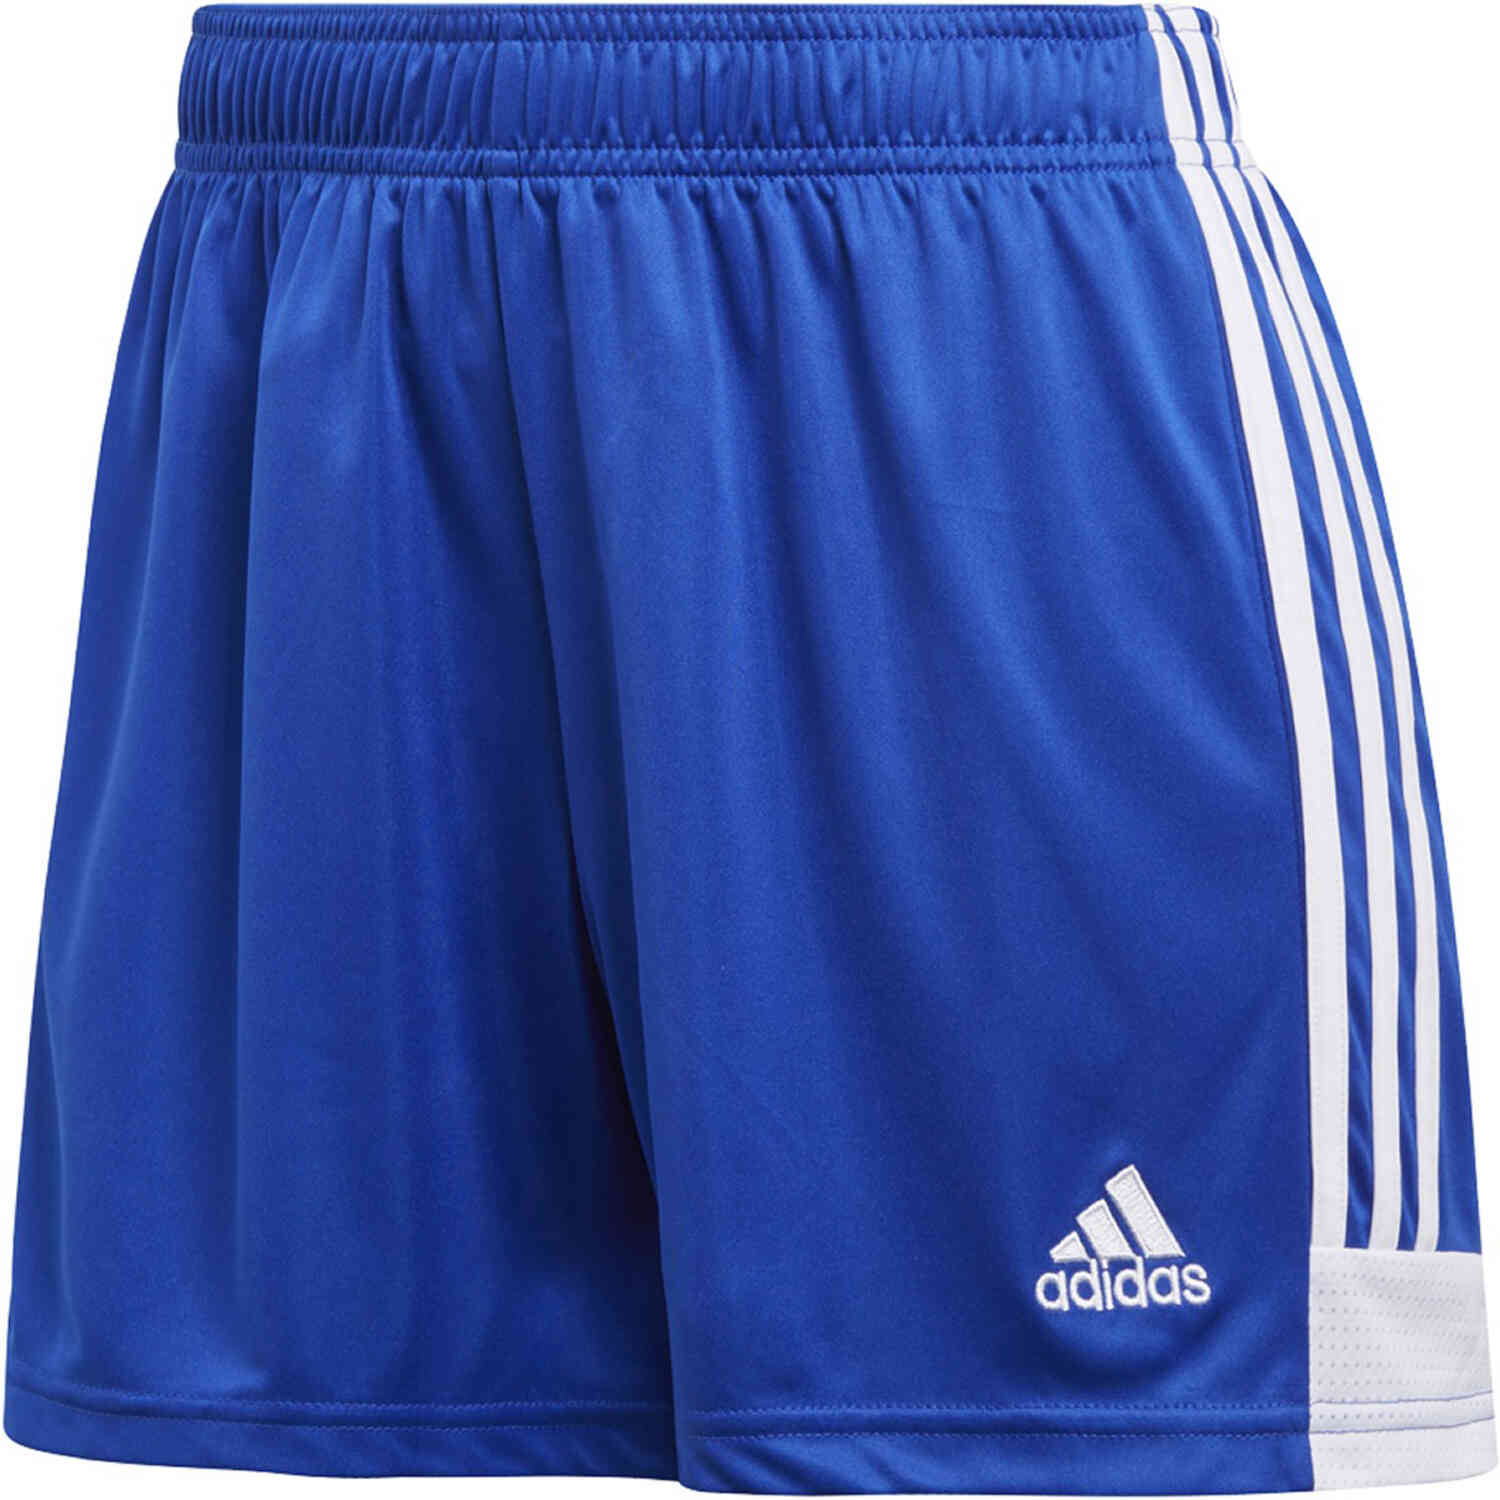 womens adidas blue shorts